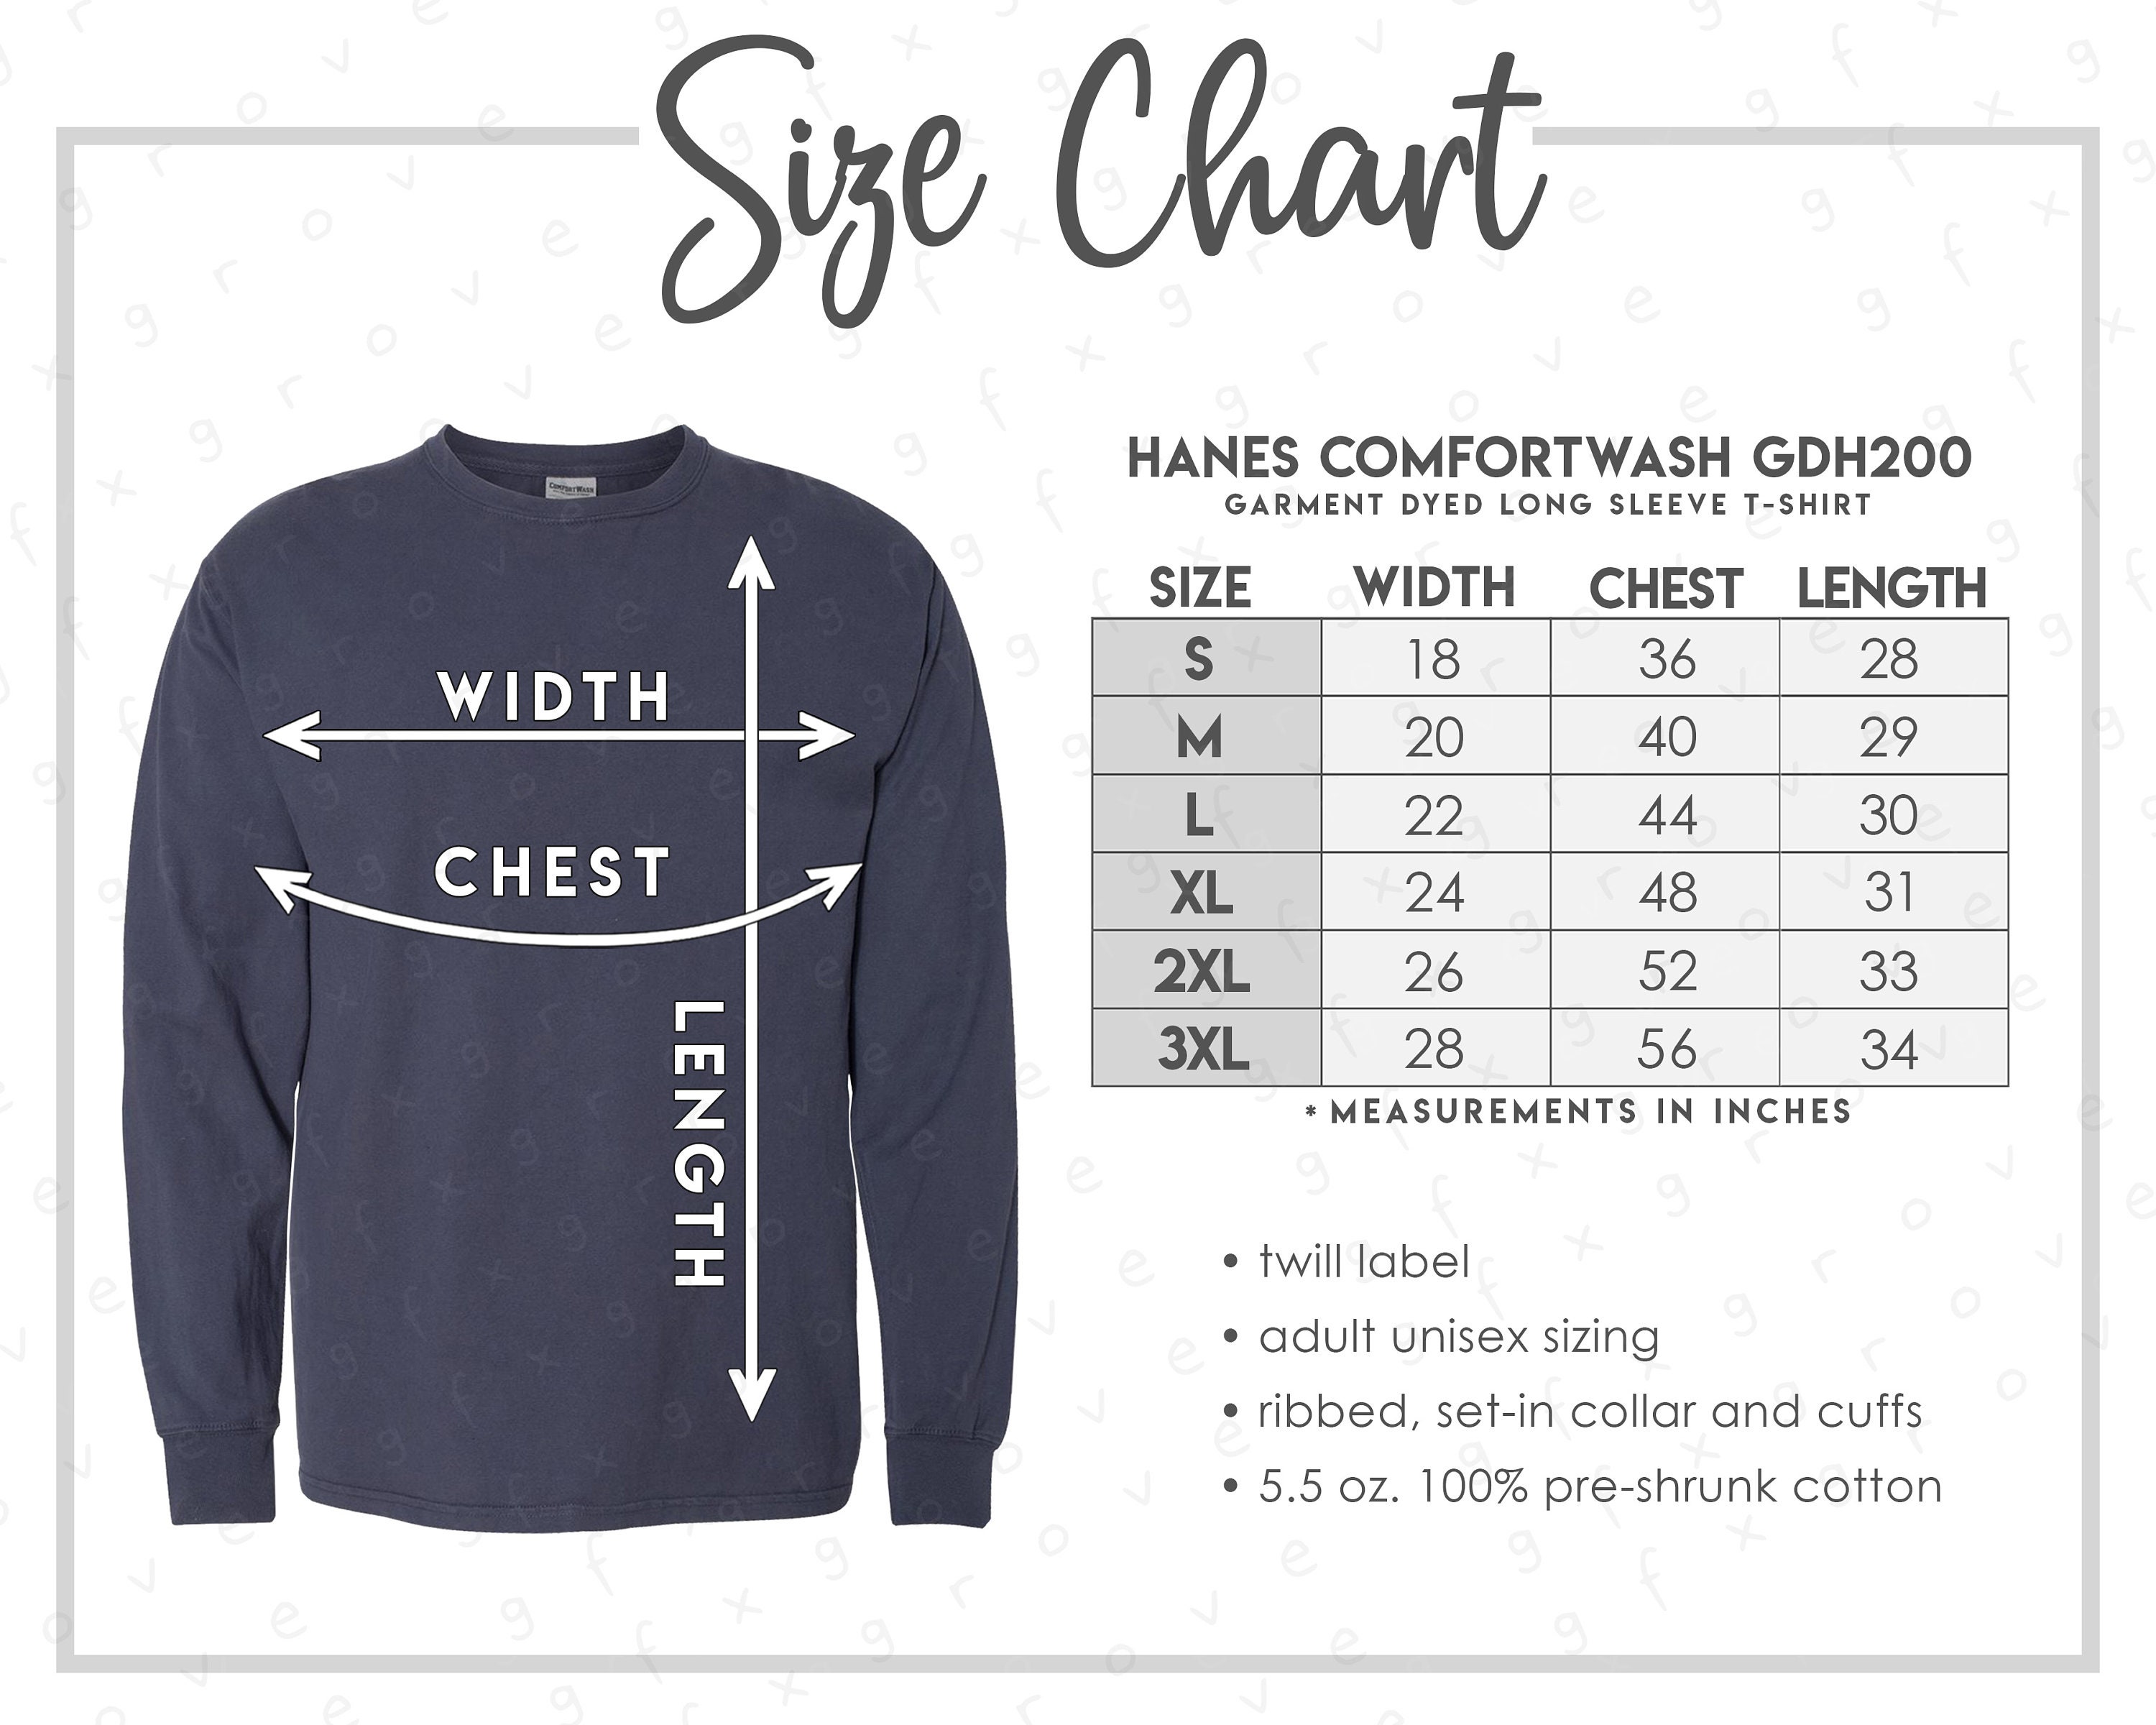 Hanes Comfortwash GDH200 Size Chart Comfortwash Long Sleeve T-shirt Size  Chart Comfortwash by Hanes GDH200 -  Australia